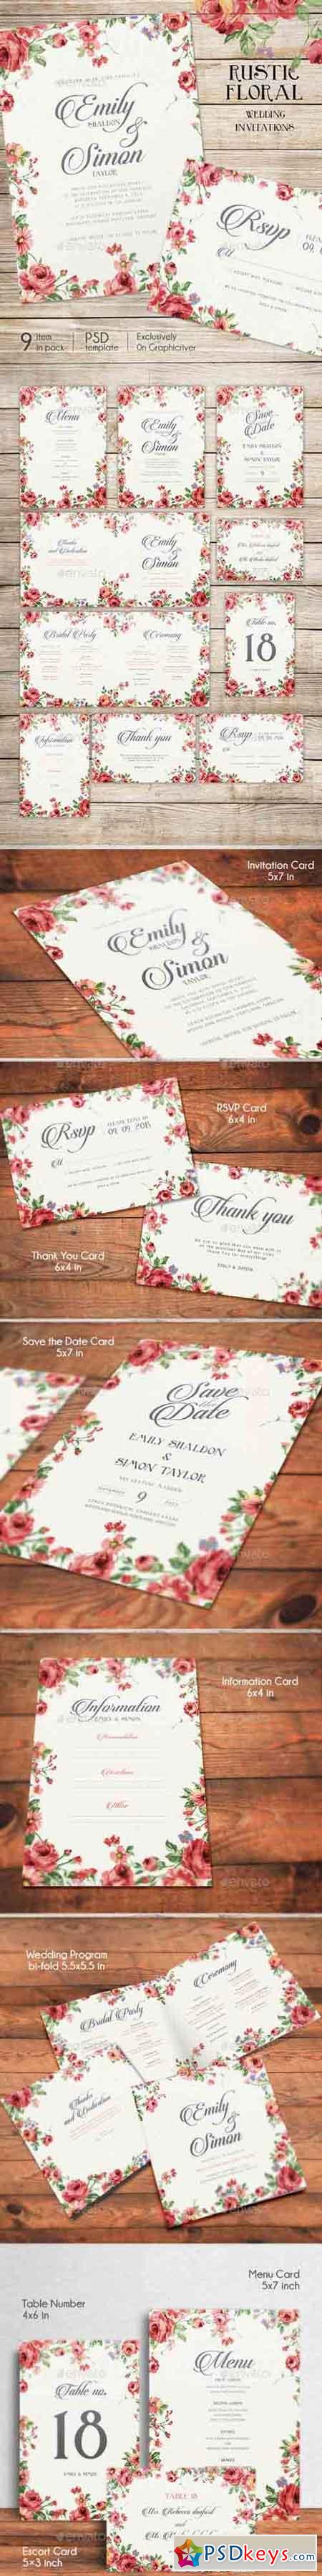 Rustic Floral Wedding Invitations 10358801